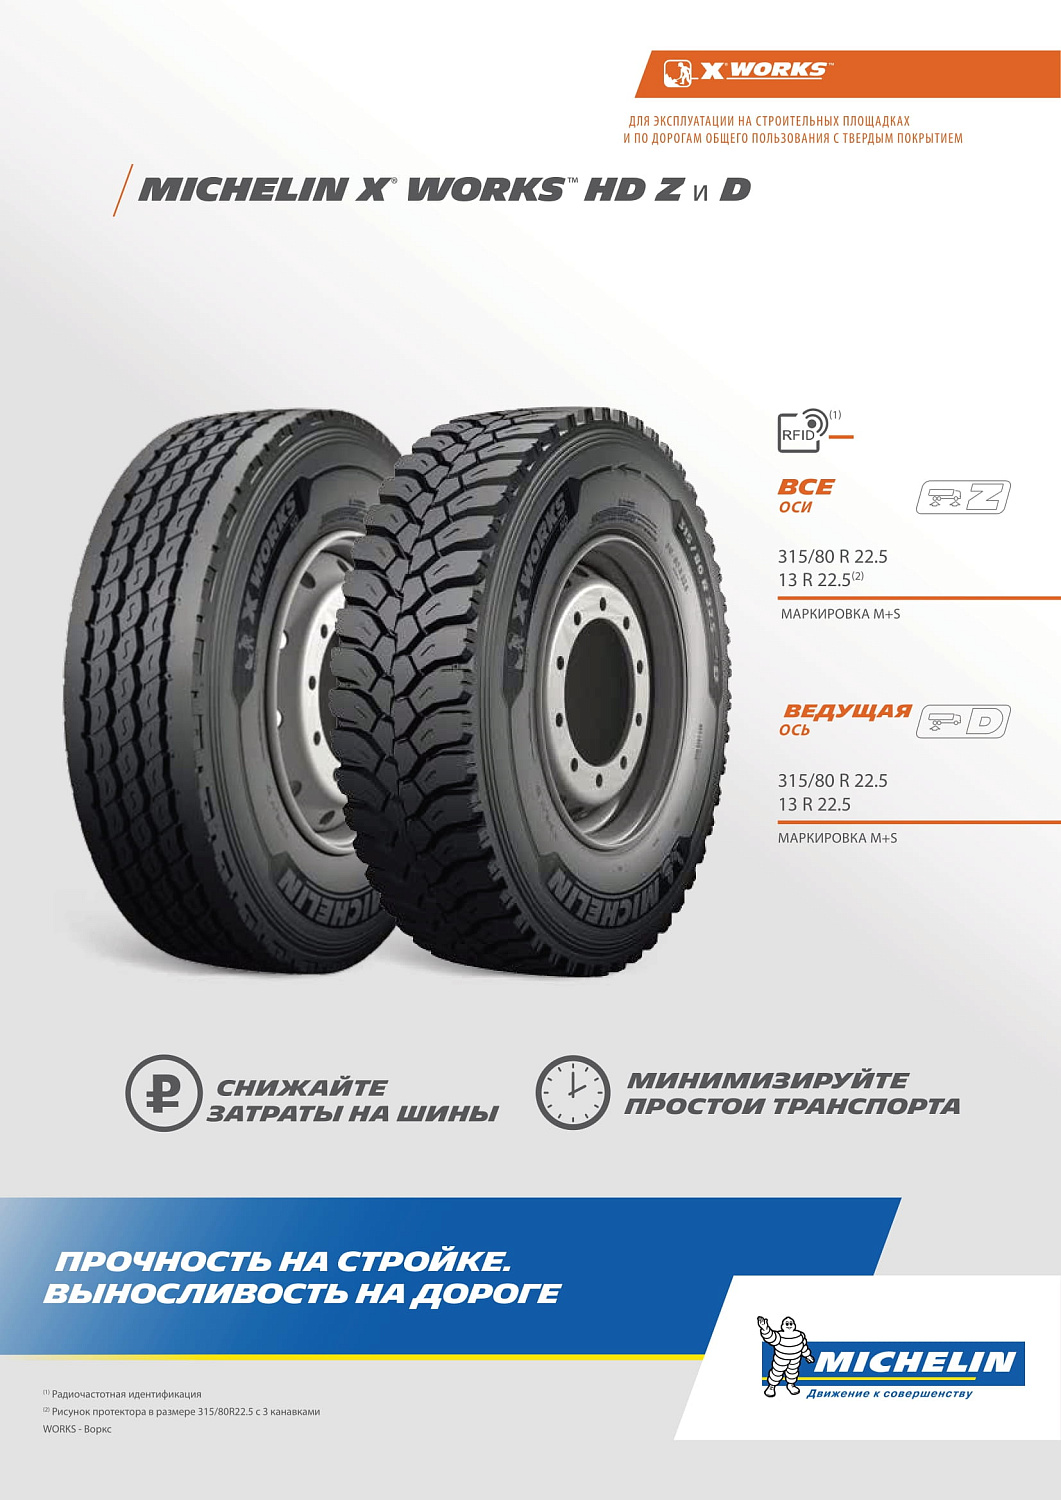 Michelin X Works HD Z 315/80 R22.5 TL